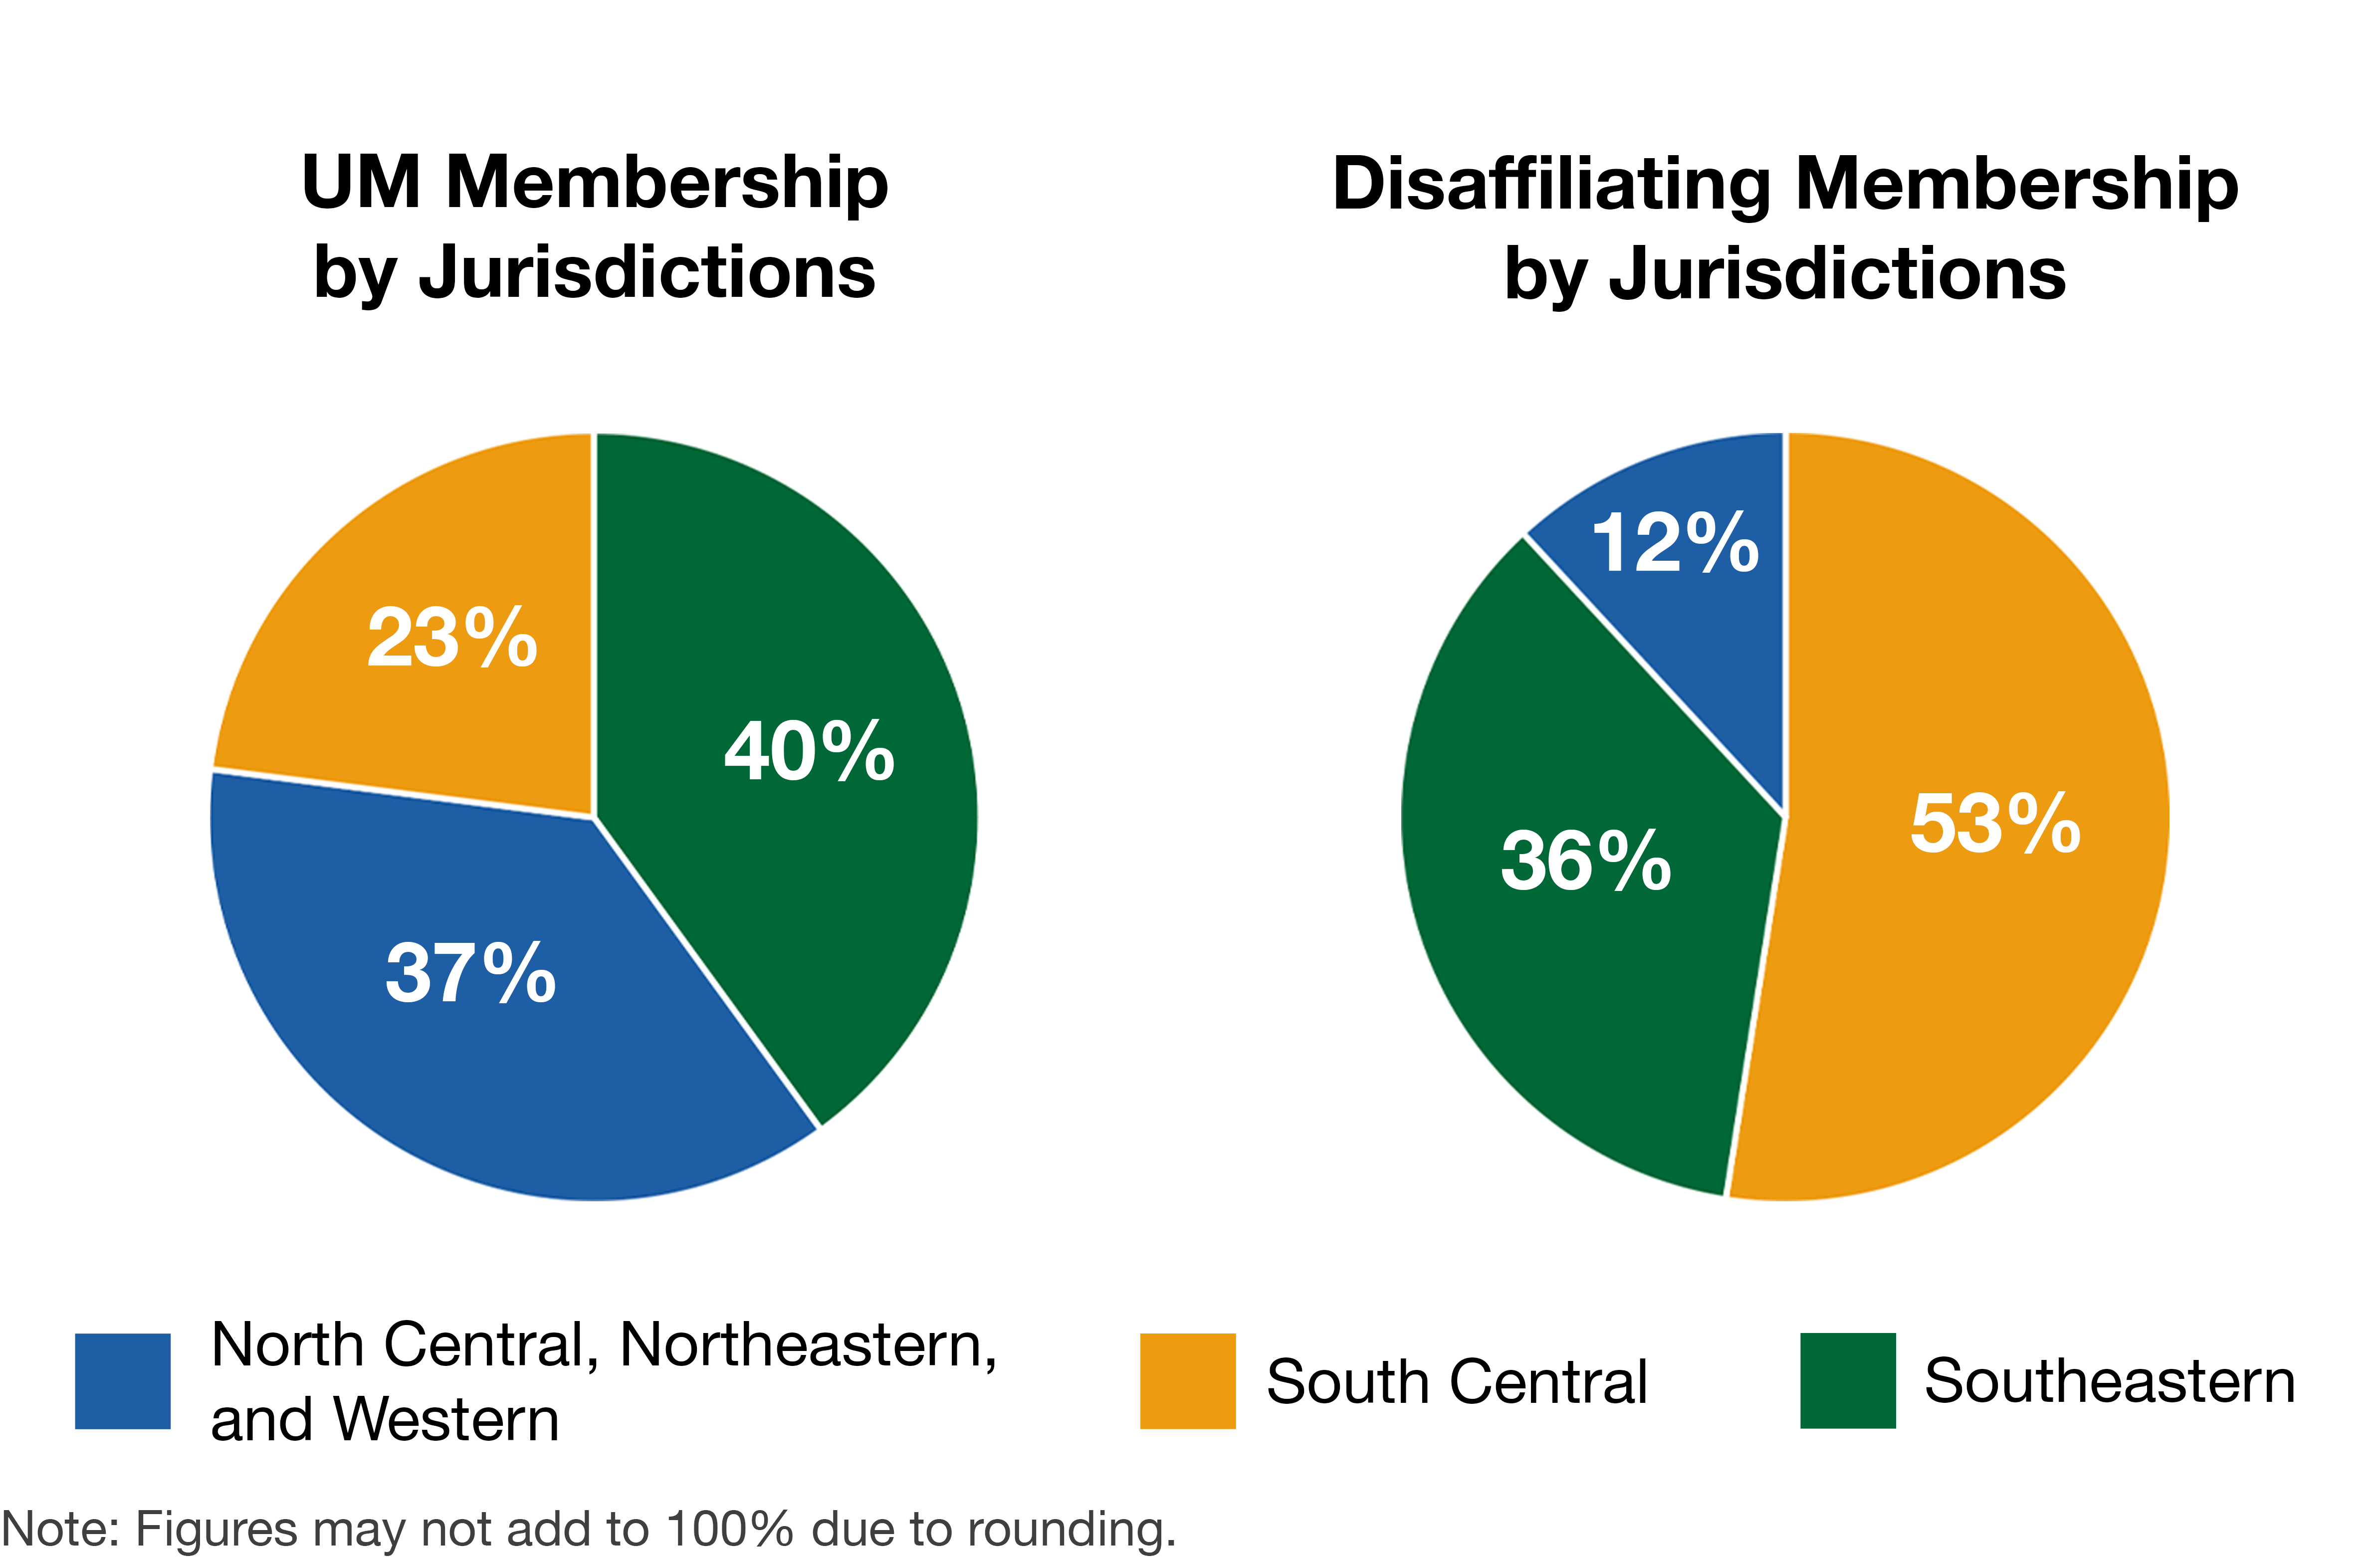 UM Membership by Jurisdictions and Disaffiliating Membership by Jurisdictions pie charts